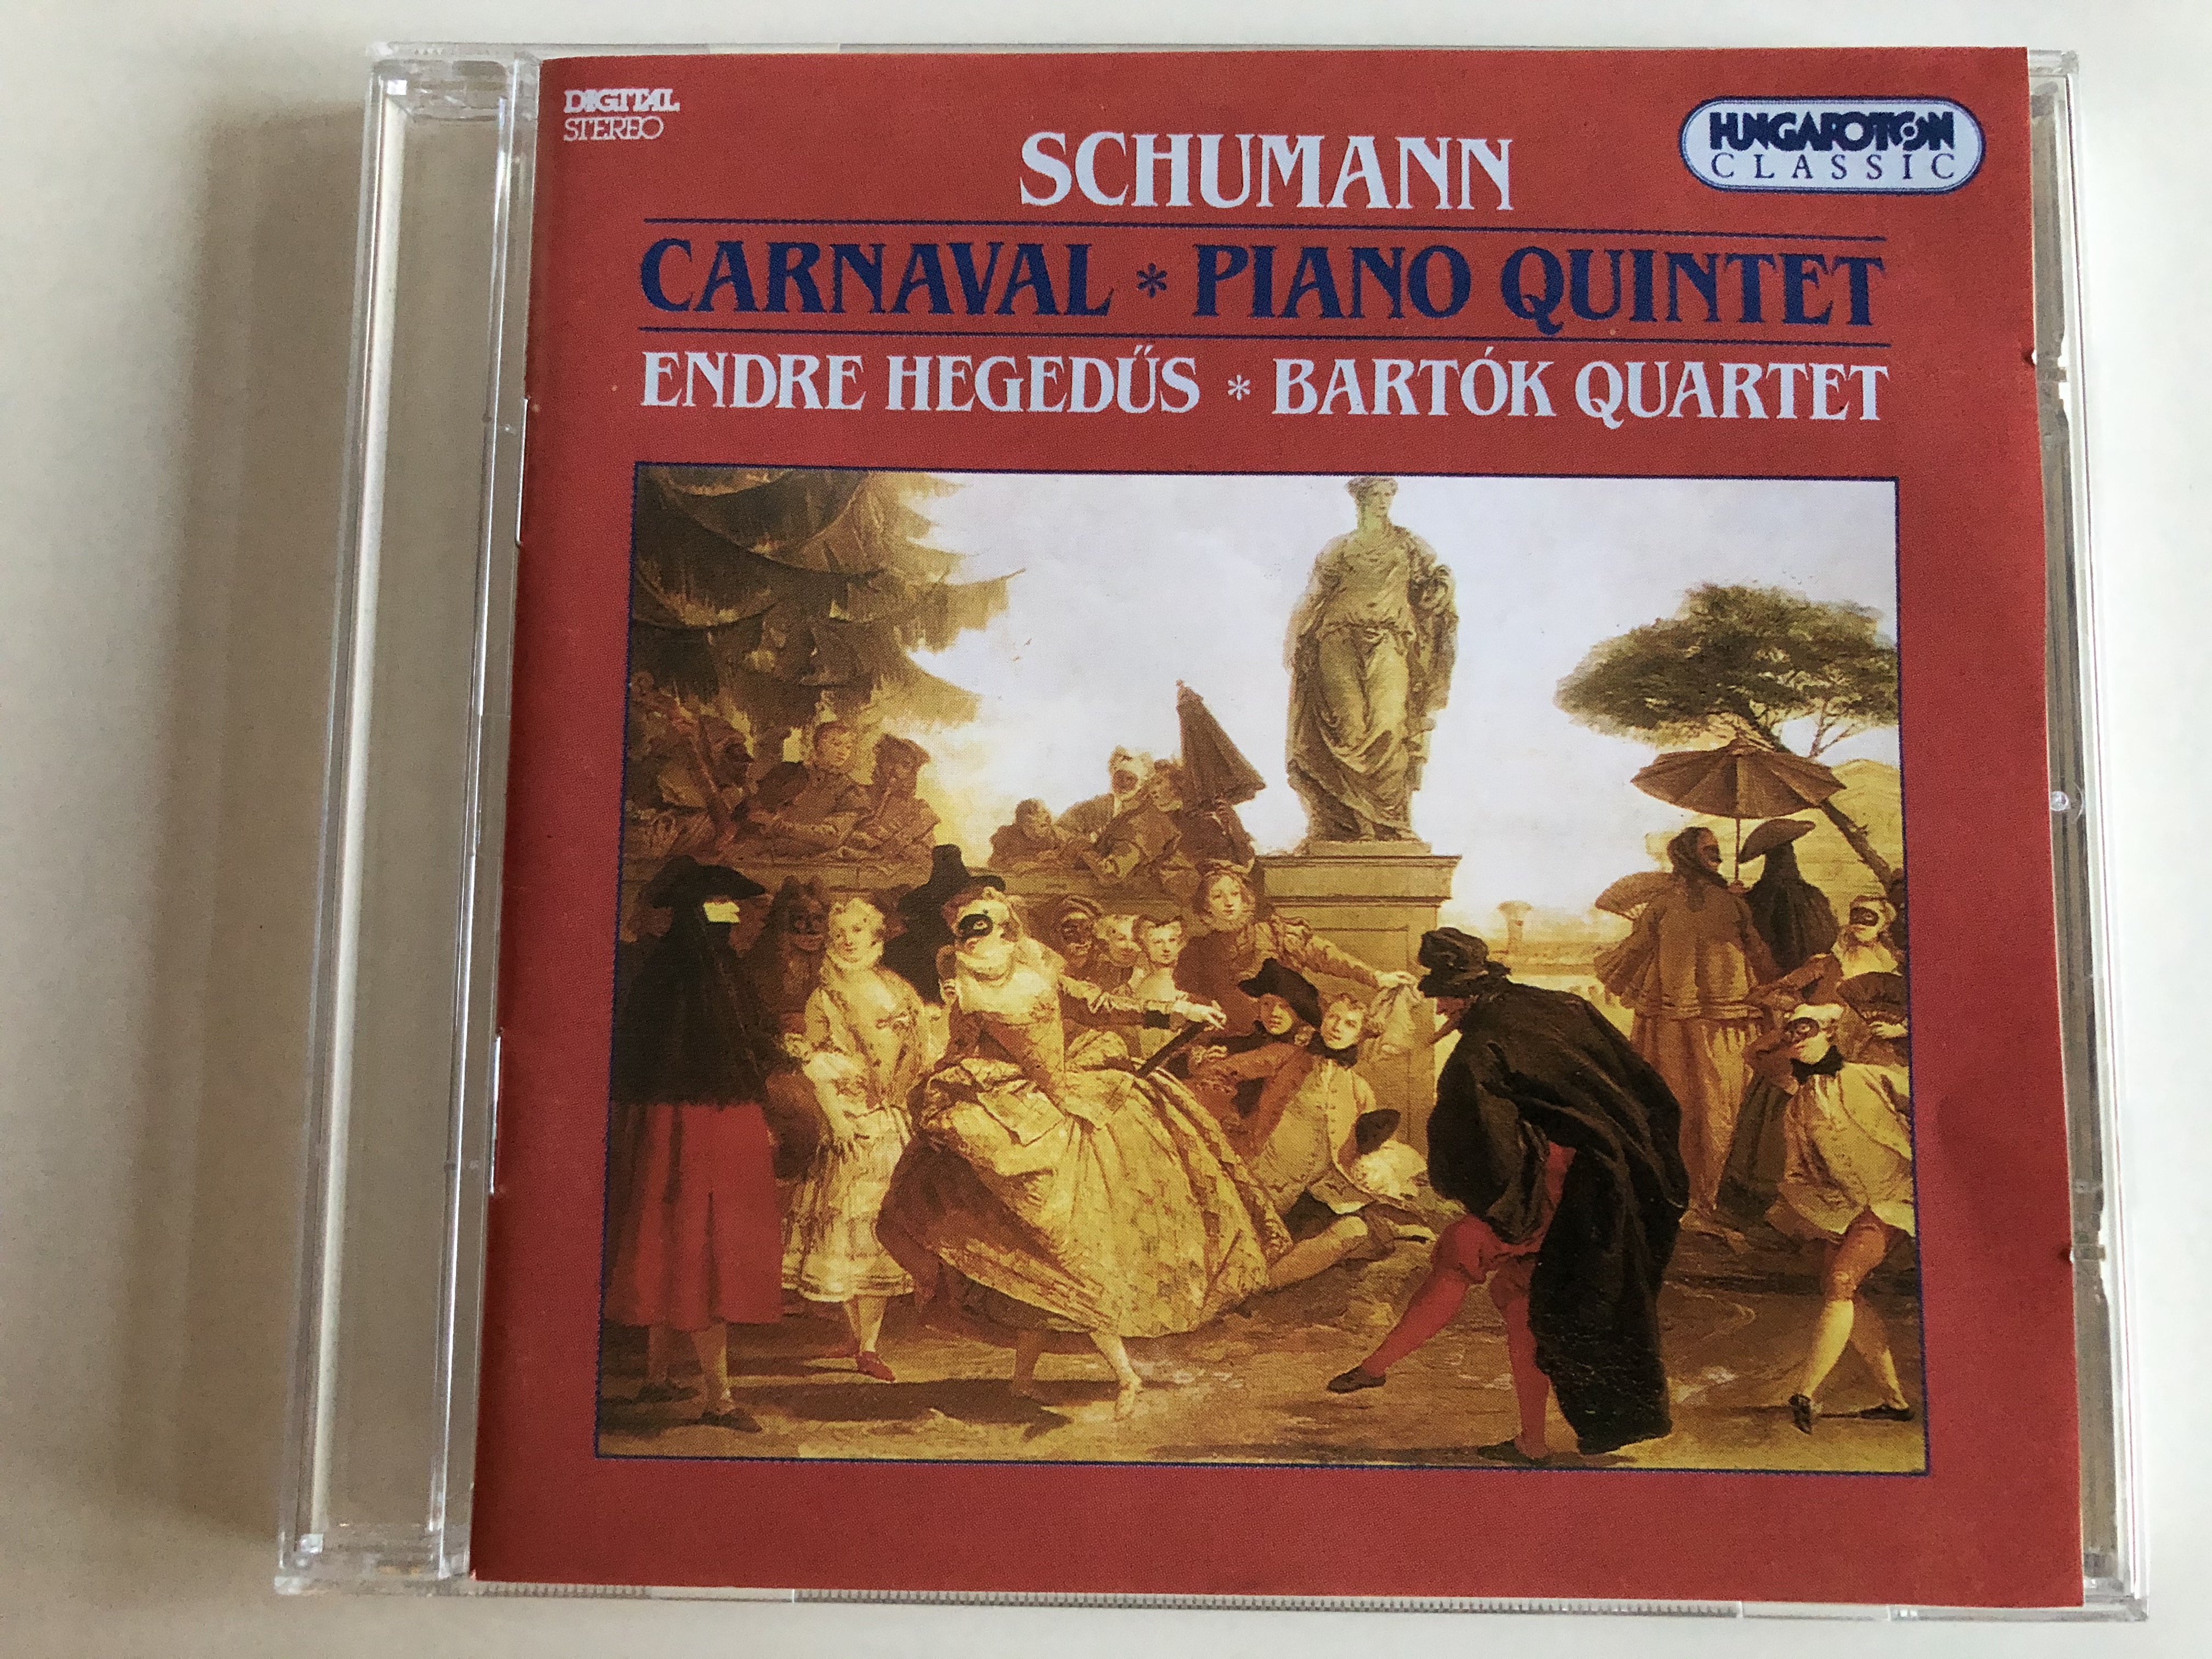 schumann-carnaval-piano-quartet-endre-heged-s-bart-k-quartet-hungaroton-classic-audio-cd-1994-stereo-hcd-31560-1-.jpg